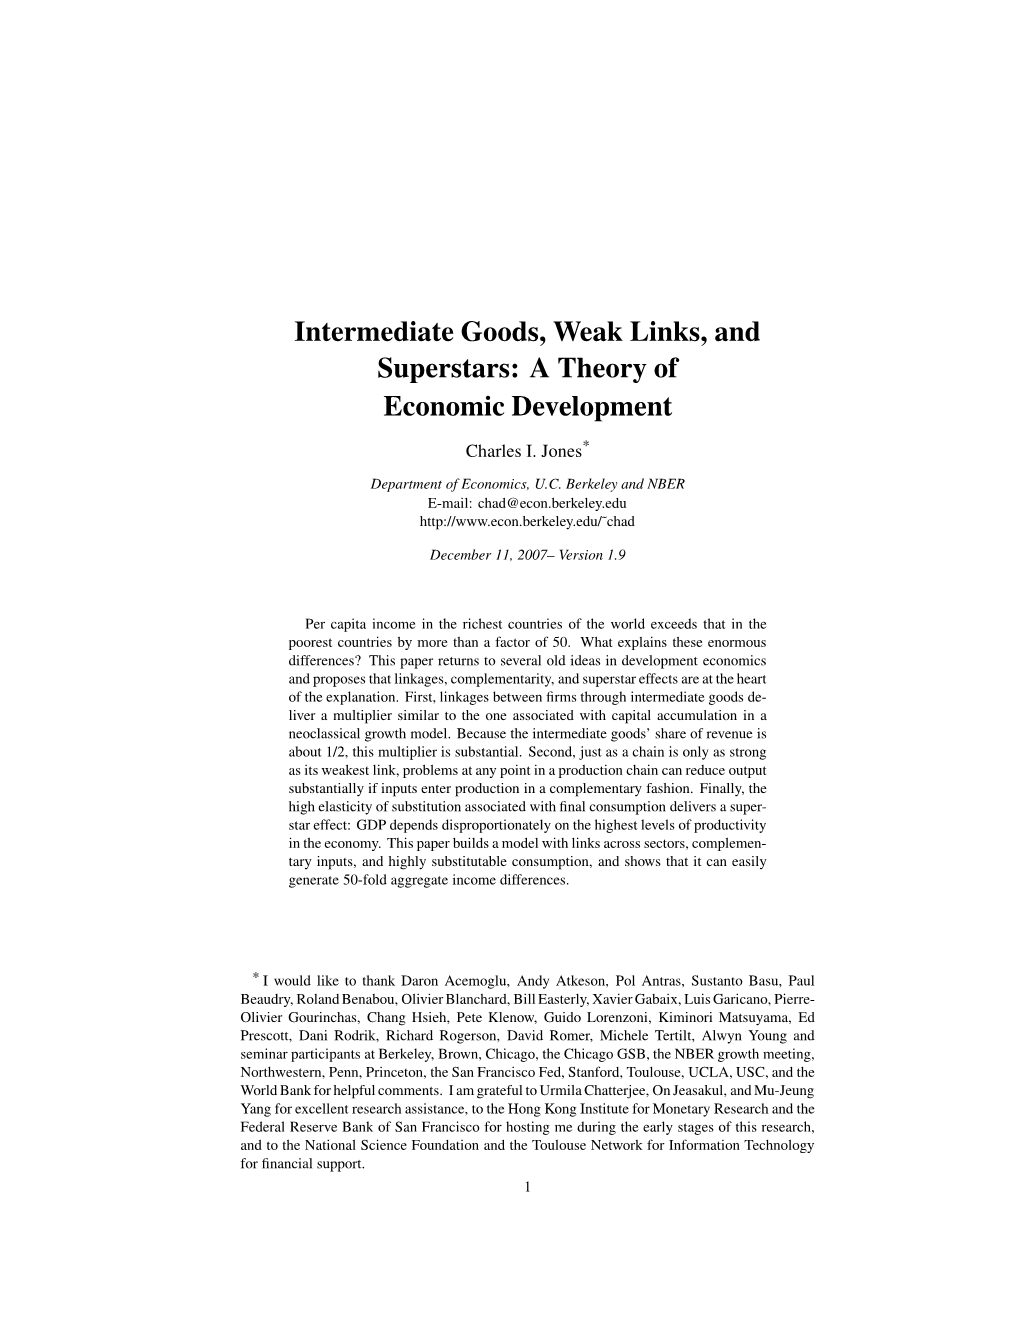 Intermediate Goods, Weak Links, and Superstars: a Theory of Economic Development